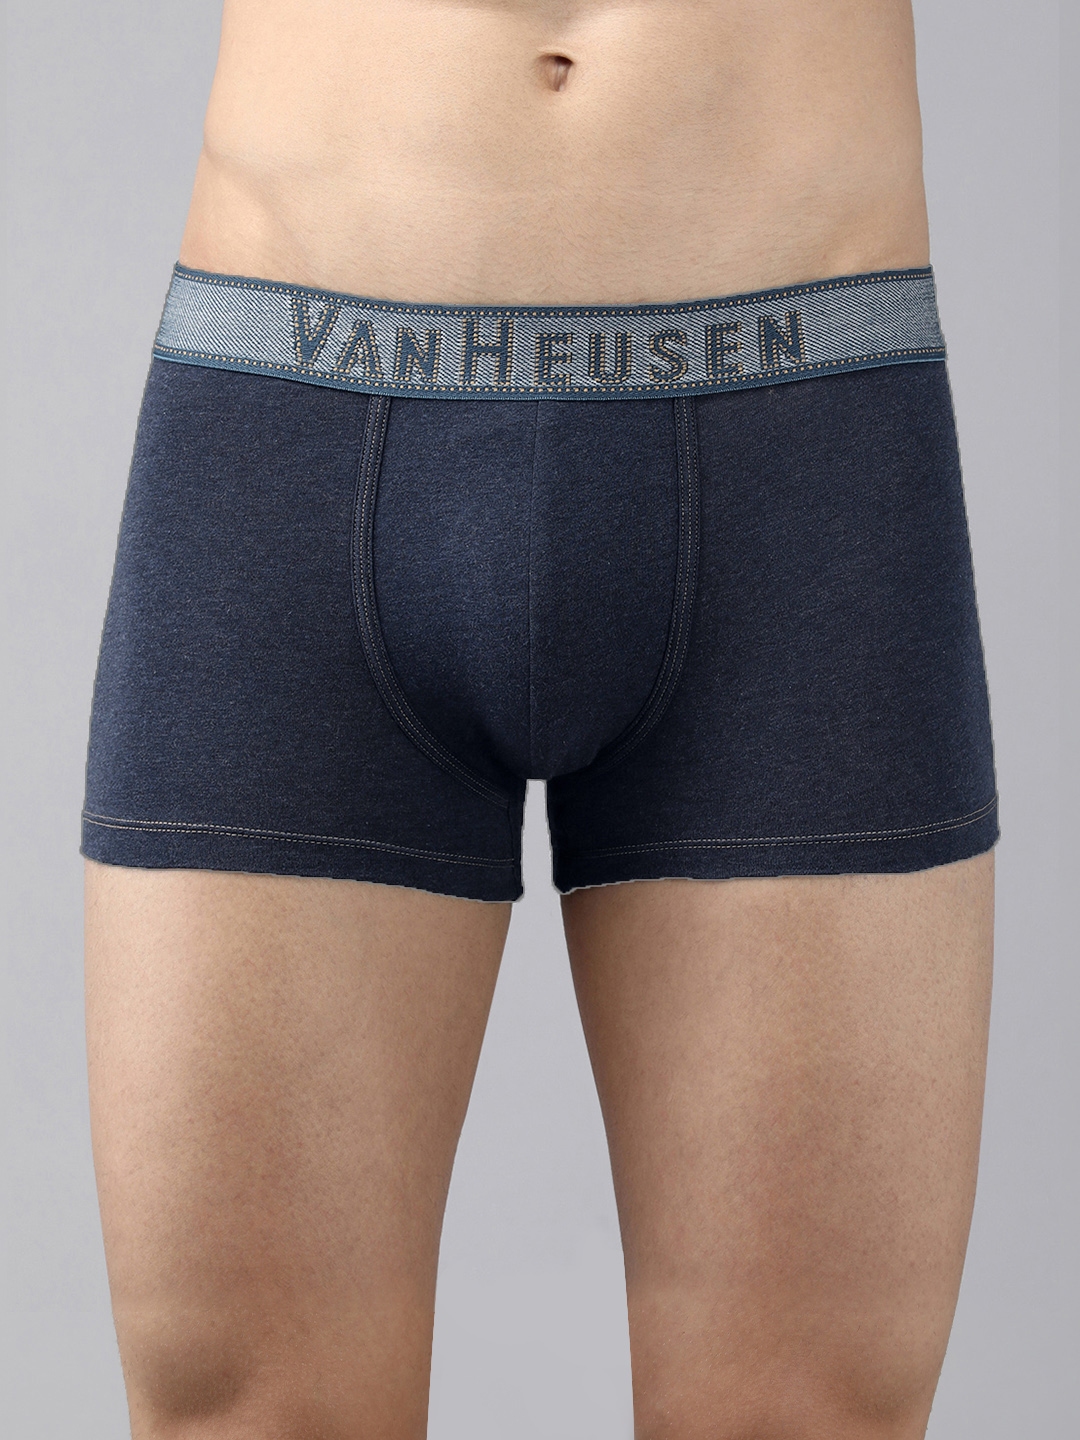 Buy Van Heusen Innerwear Men Colour Fresh & Open Fly Briefs - White online